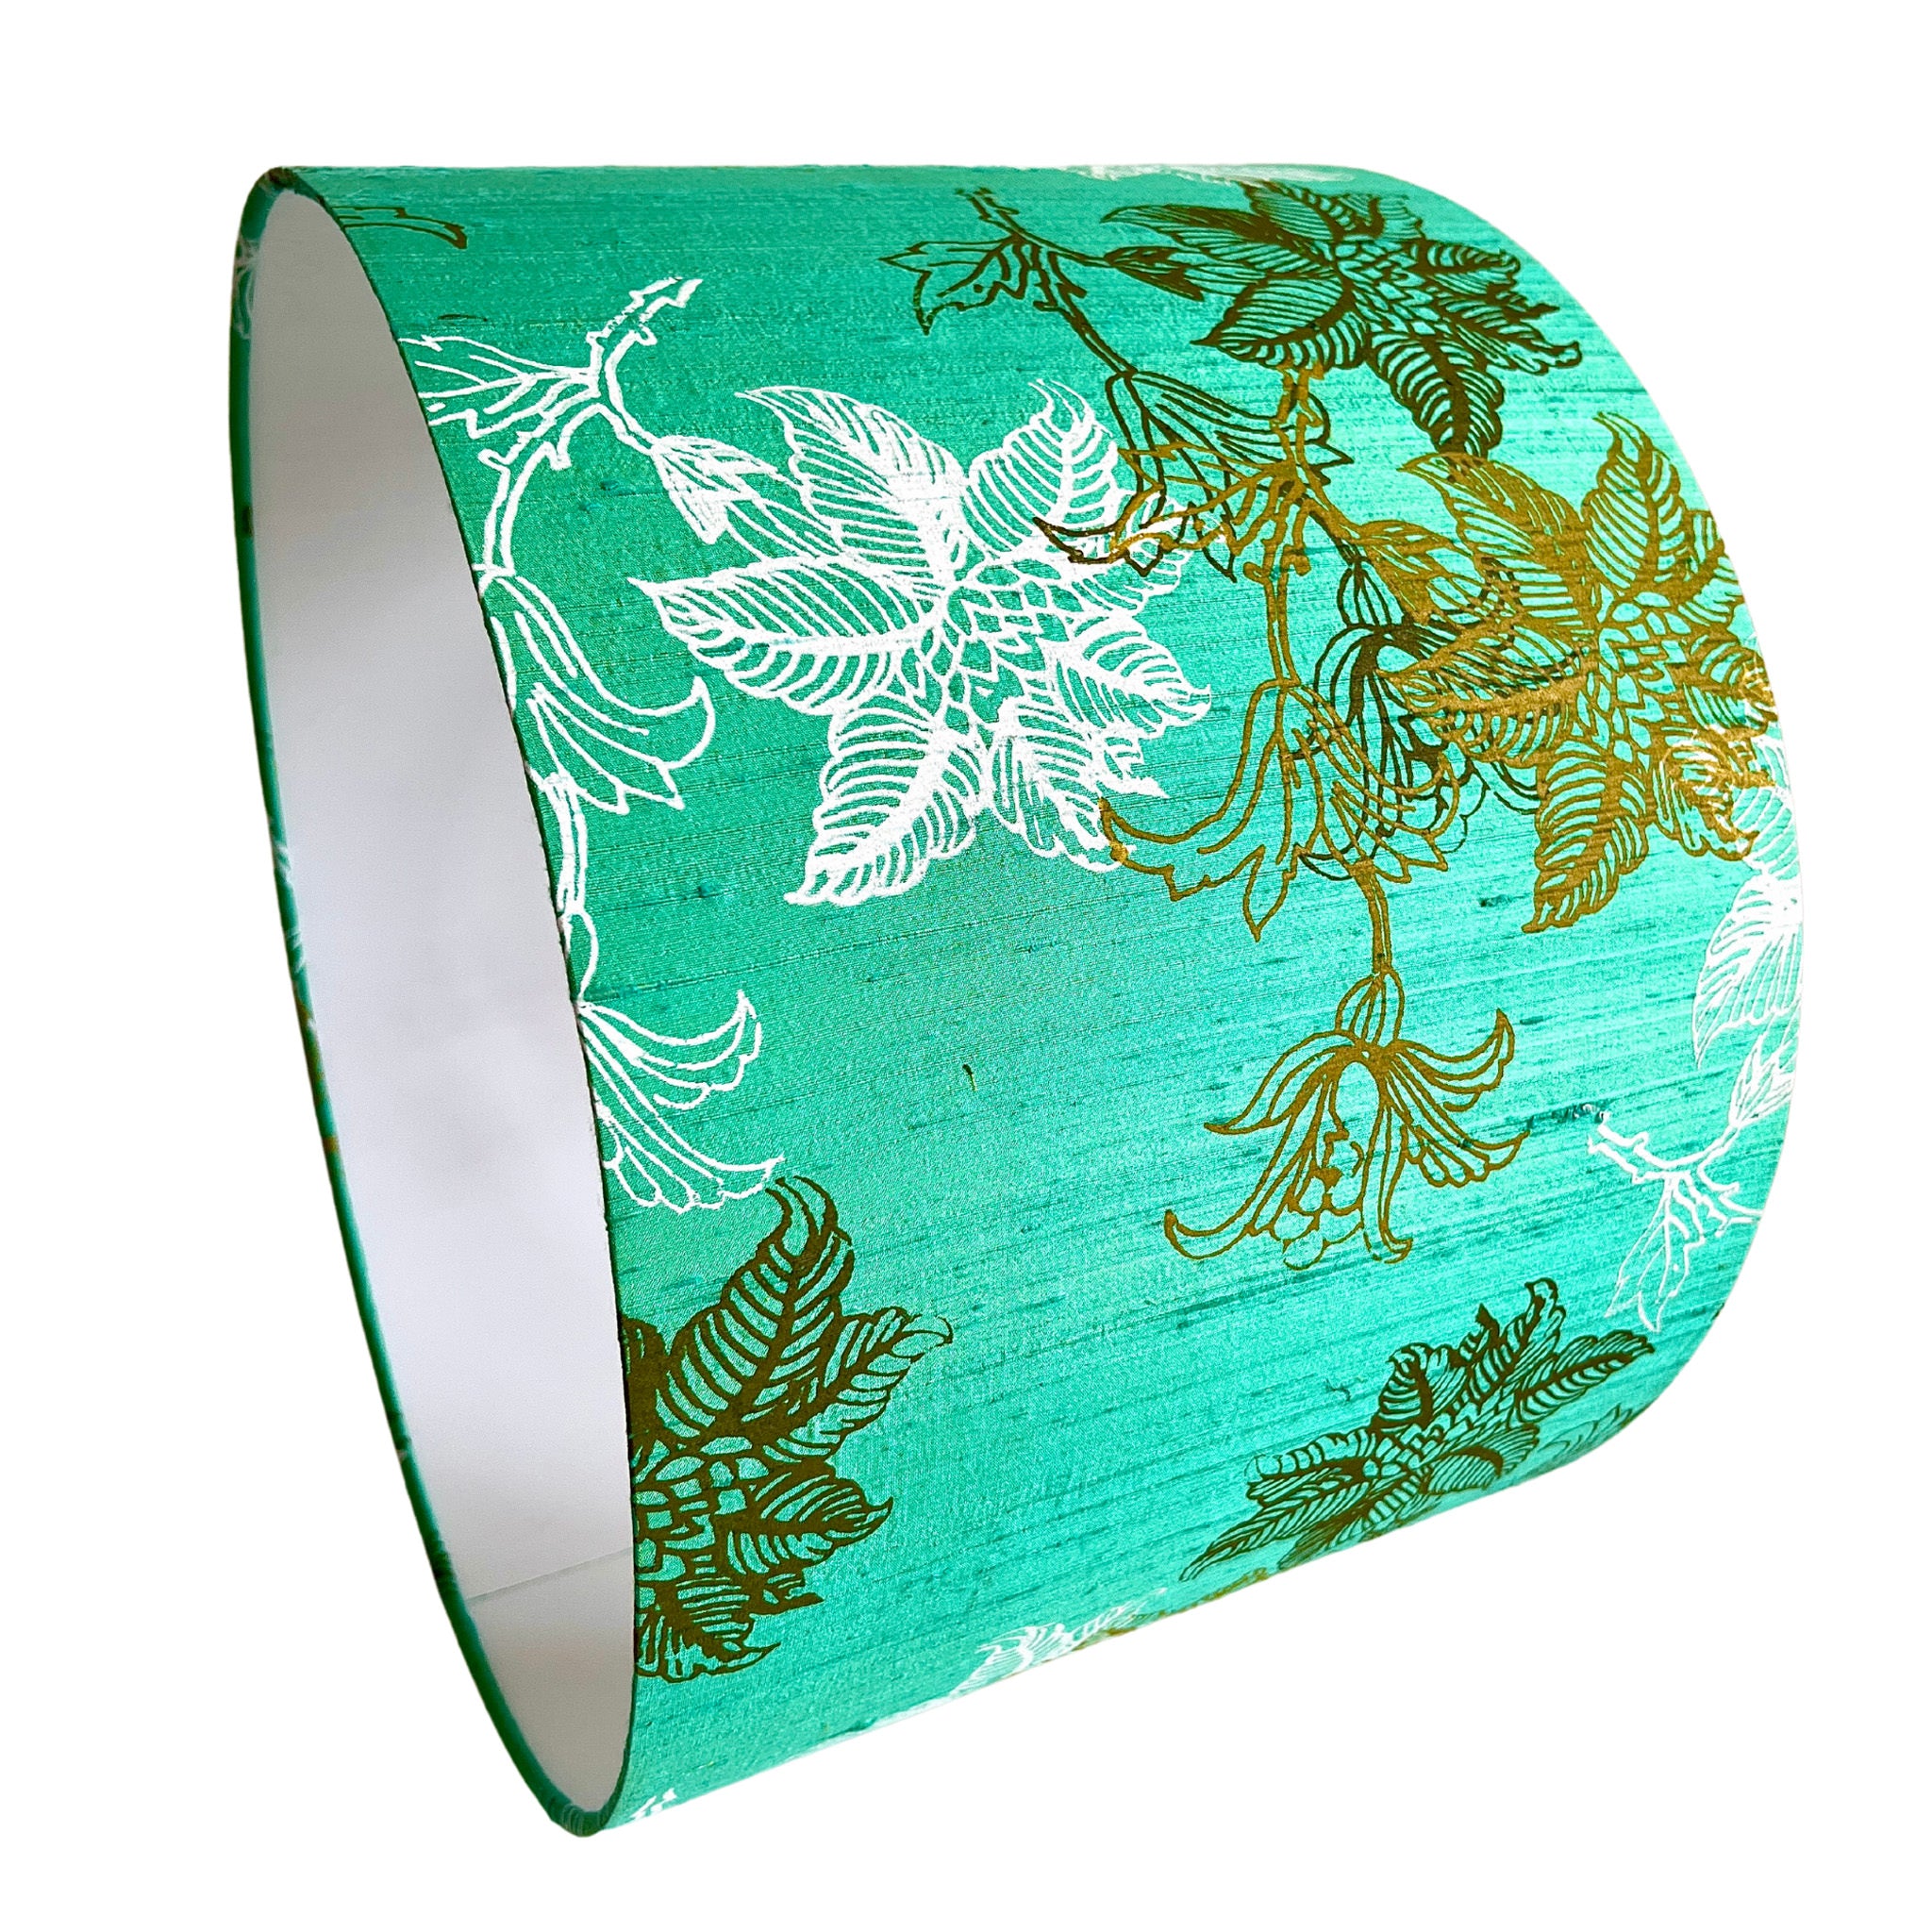 Flower / Iridescent Green Dupioni Silk Drum Lampshade by Paige Hathaway Thorn